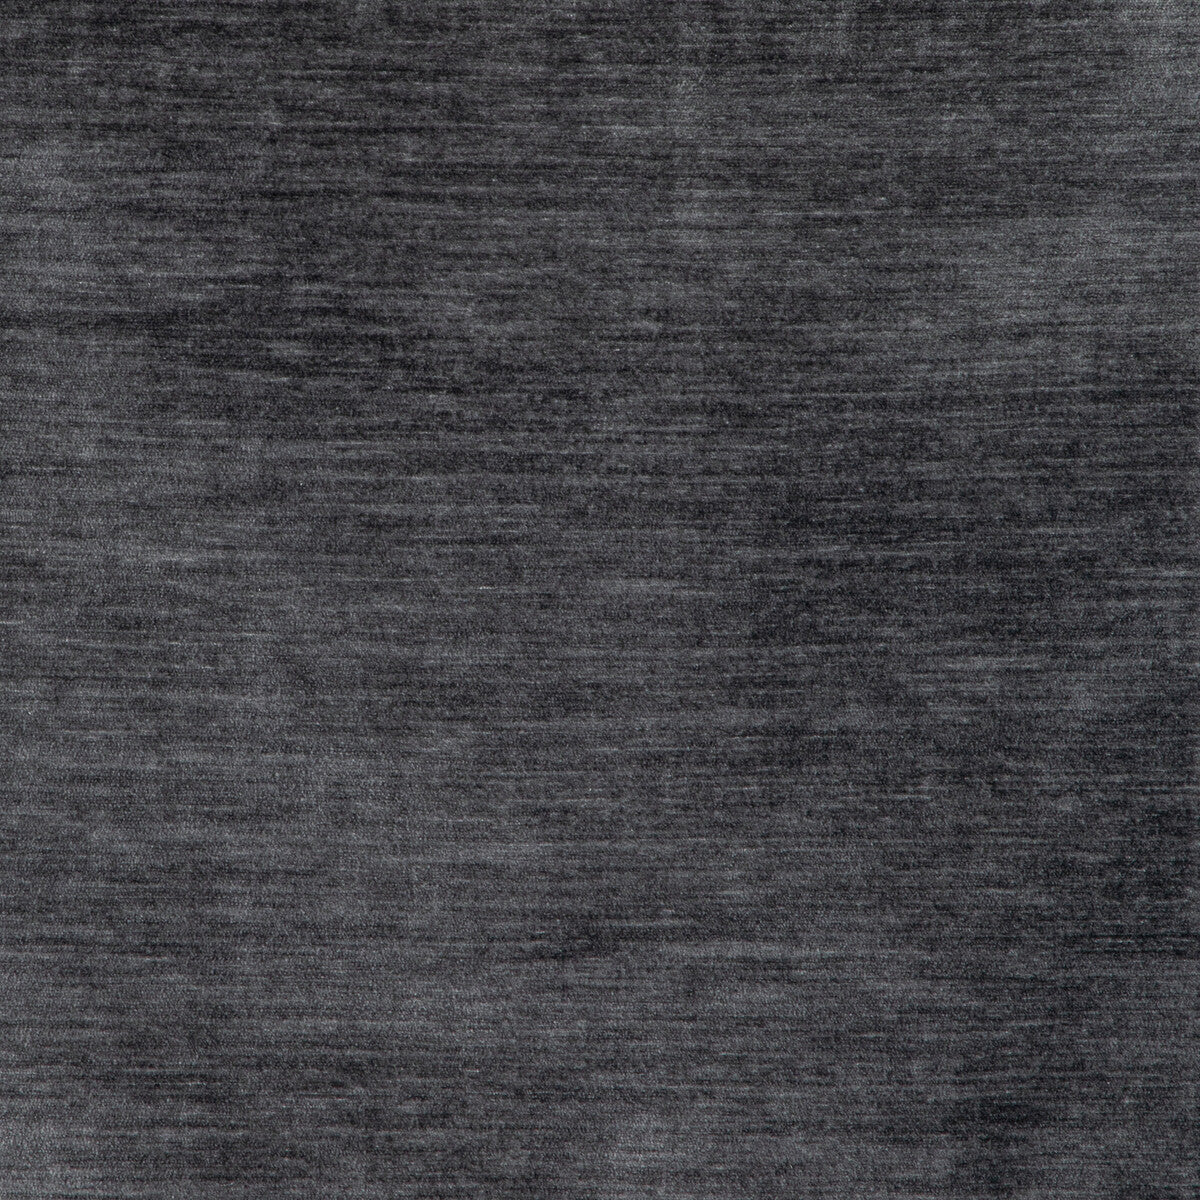 Kravet Smart fabric in 36675-21 color - pattern 36675.21.0 - by Kravet Smart in the Performance Kravetarmor collection